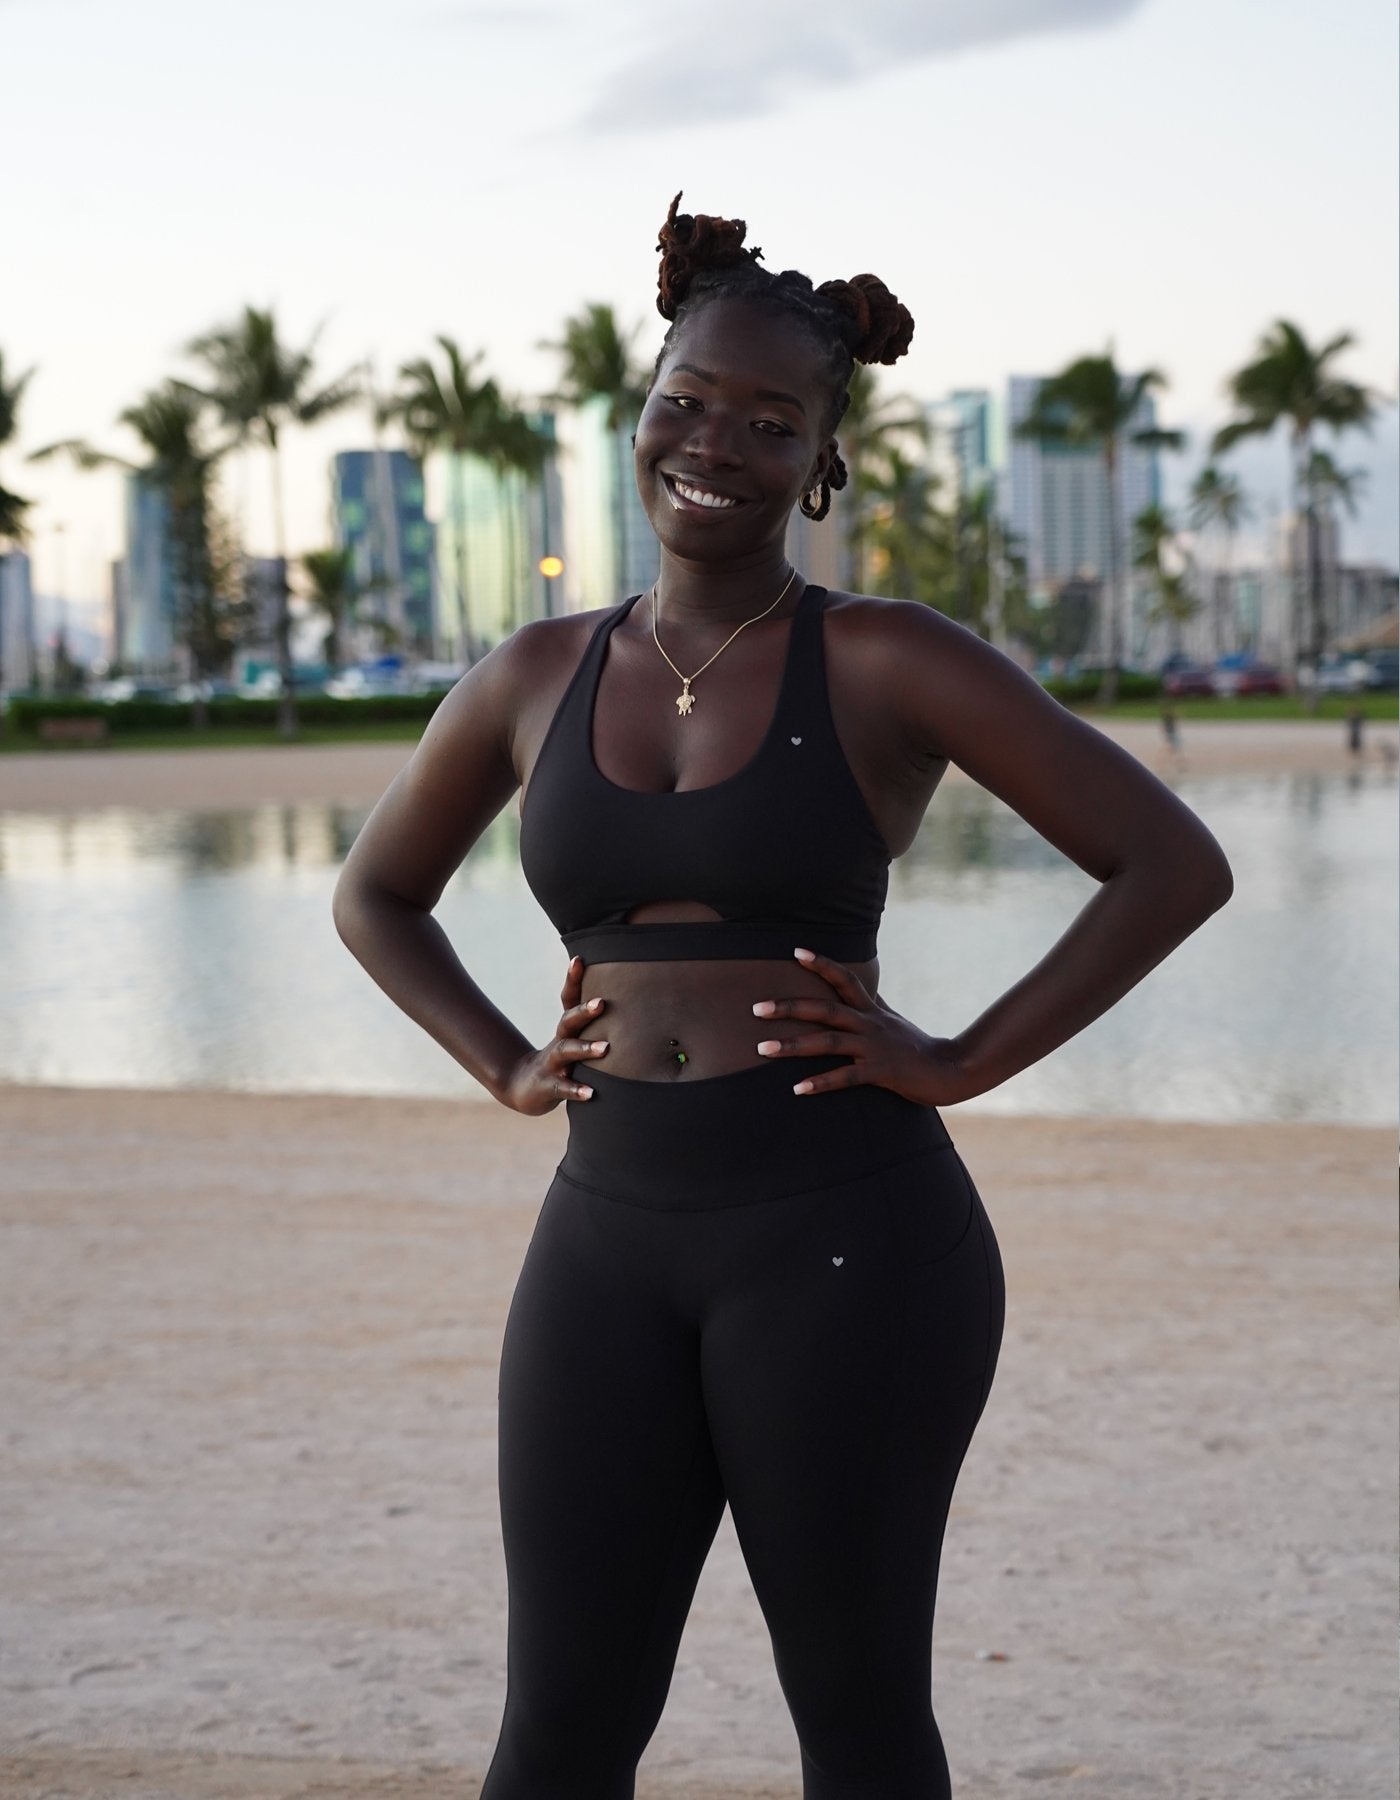 Sport leggings for Women Joluvi Fit - Flex Black – Moon Behind The Hill